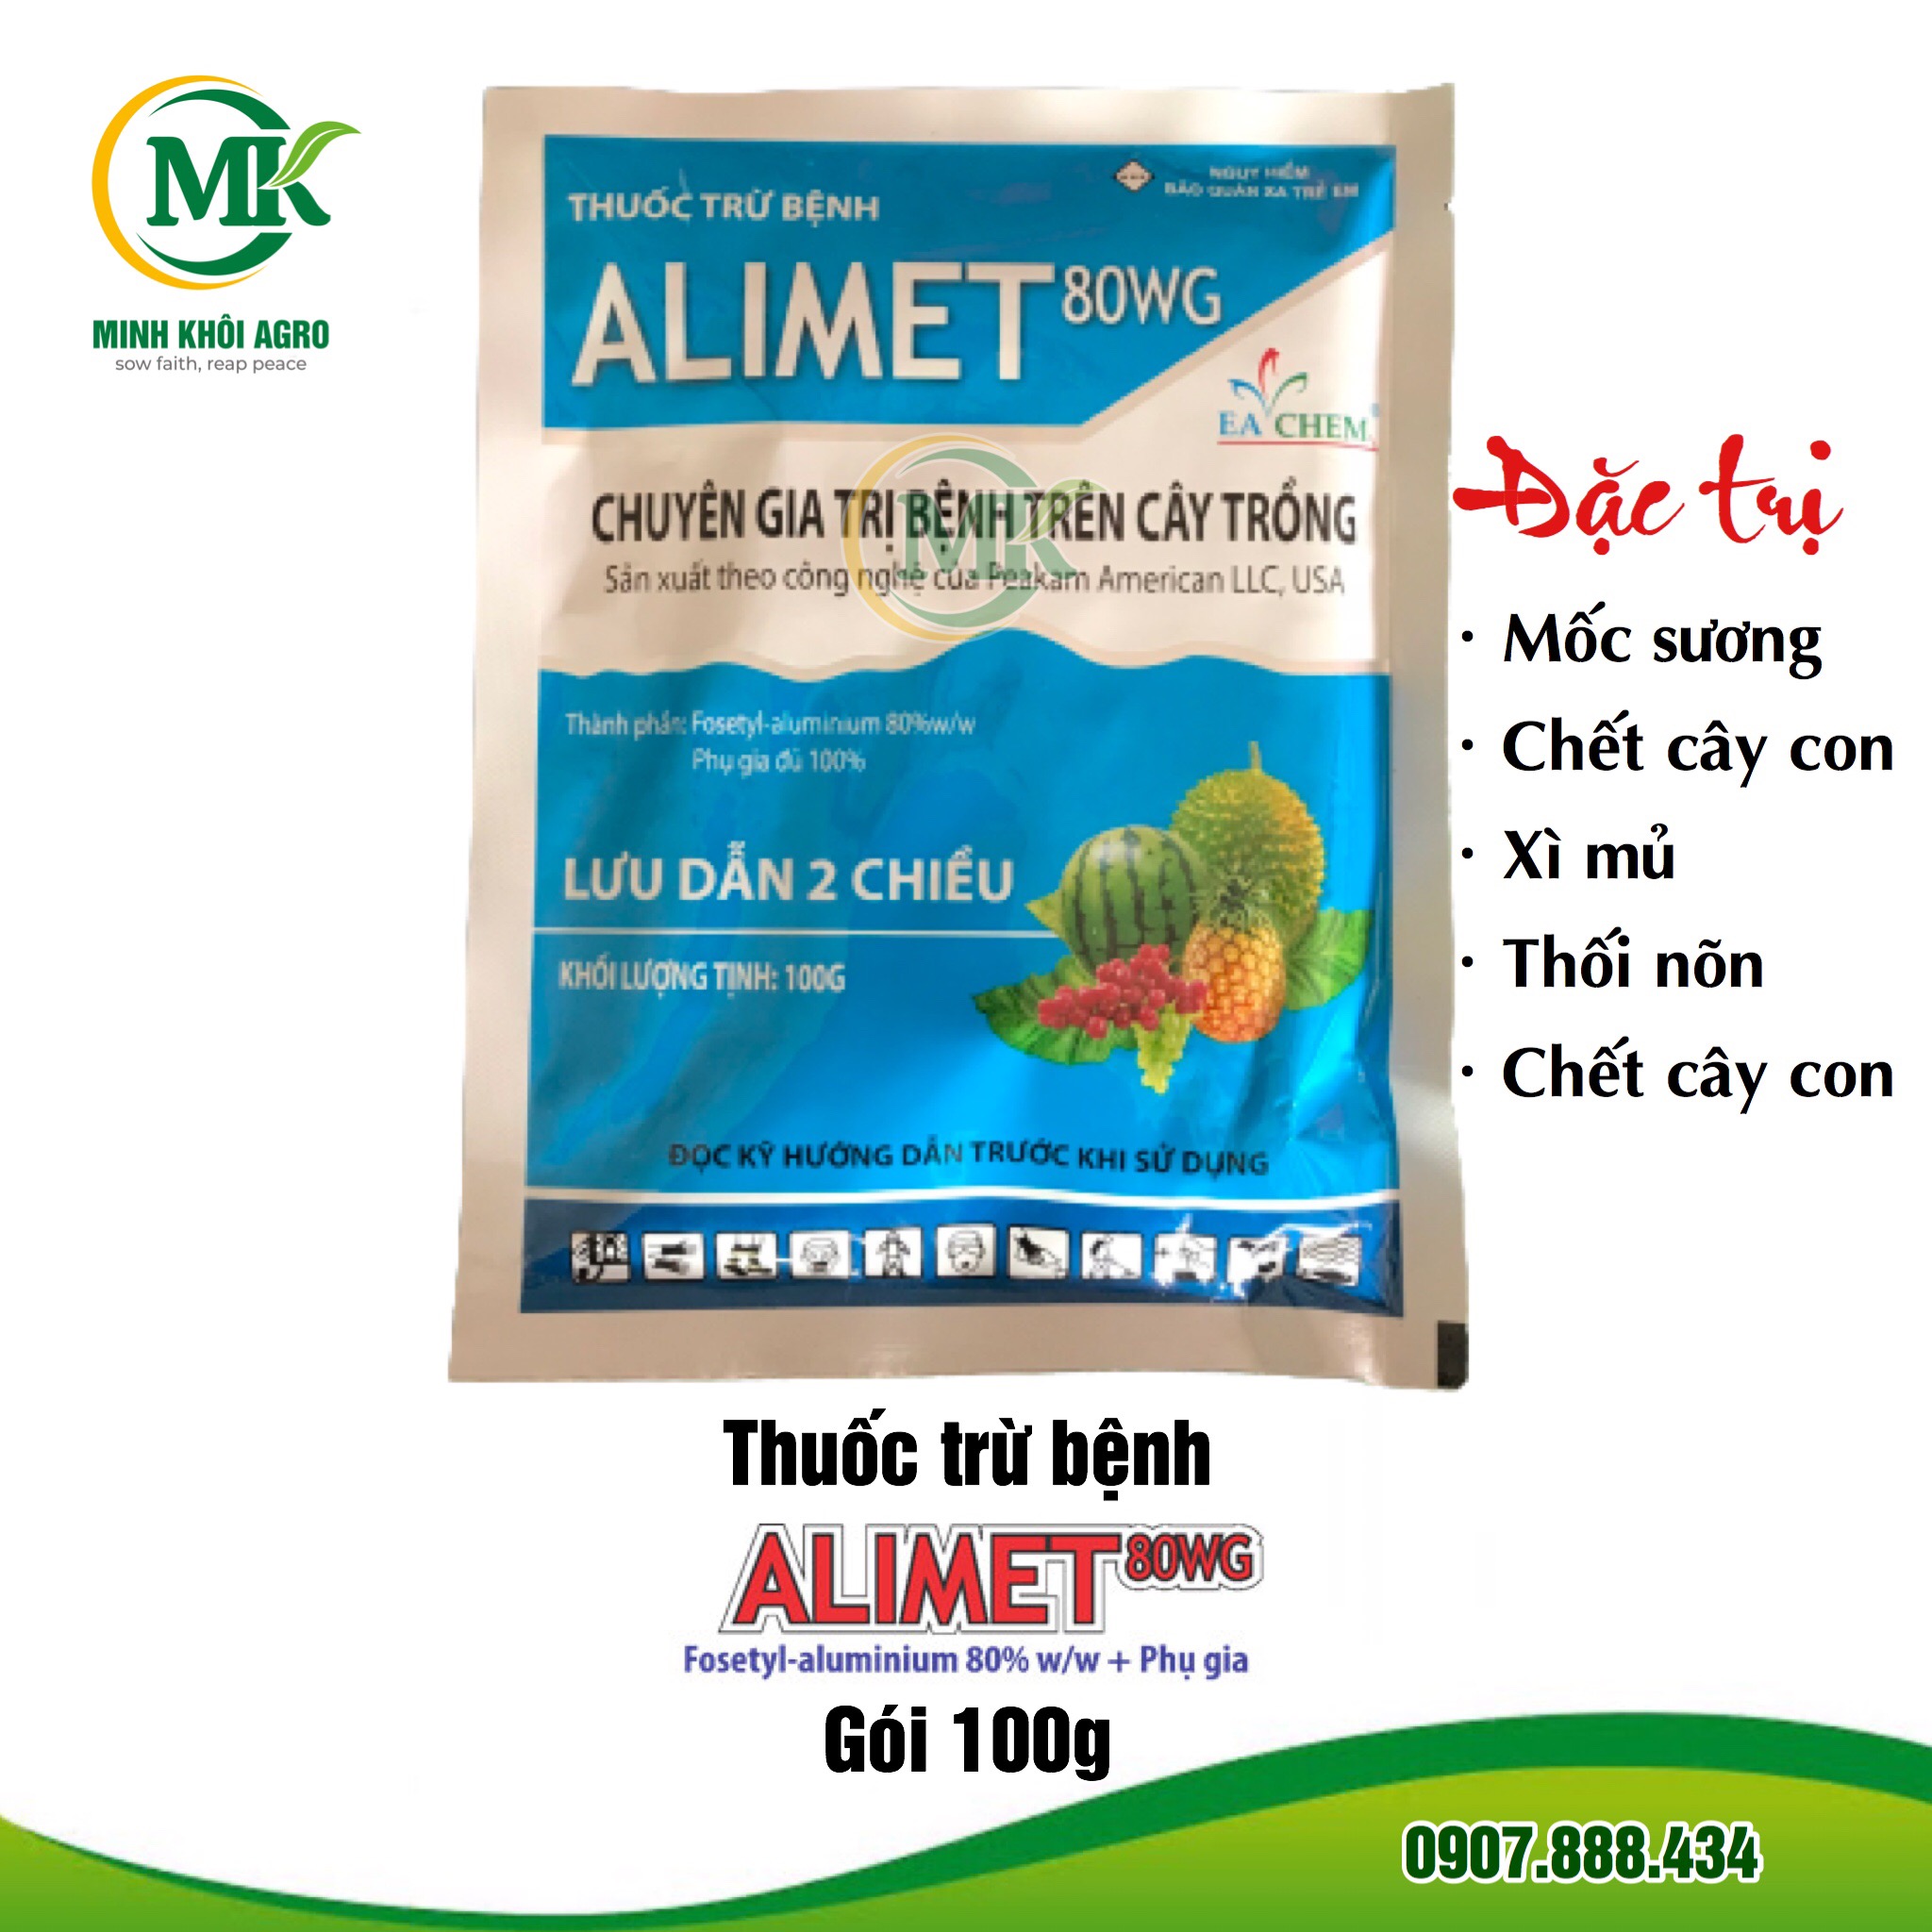 Thuốc trừ bệnh Alimet 80WG - Gói 100g